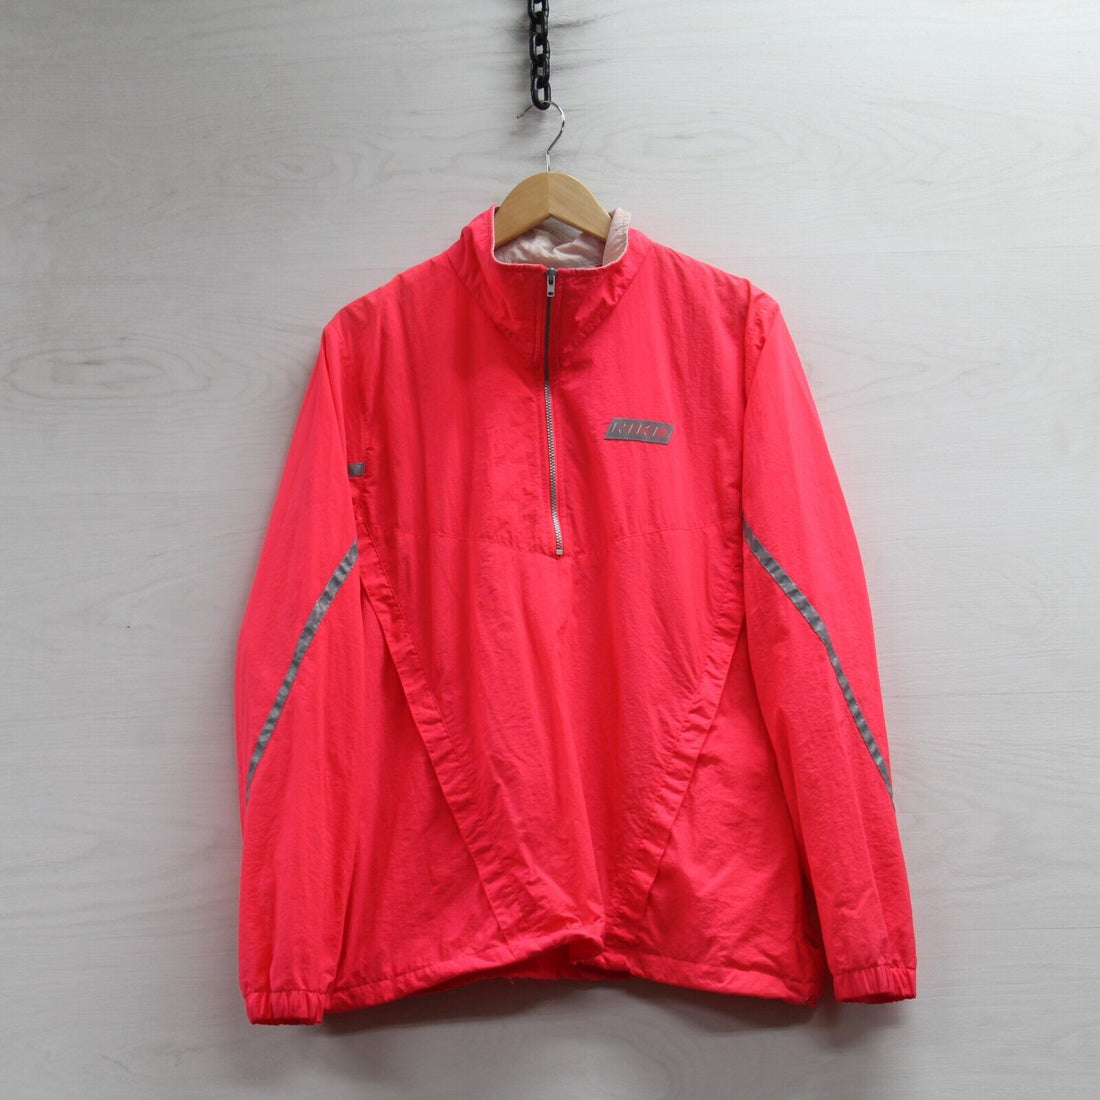 Vintage Nike Windbreaker Light Jacket Size Large Pink 80s 90s Reflective